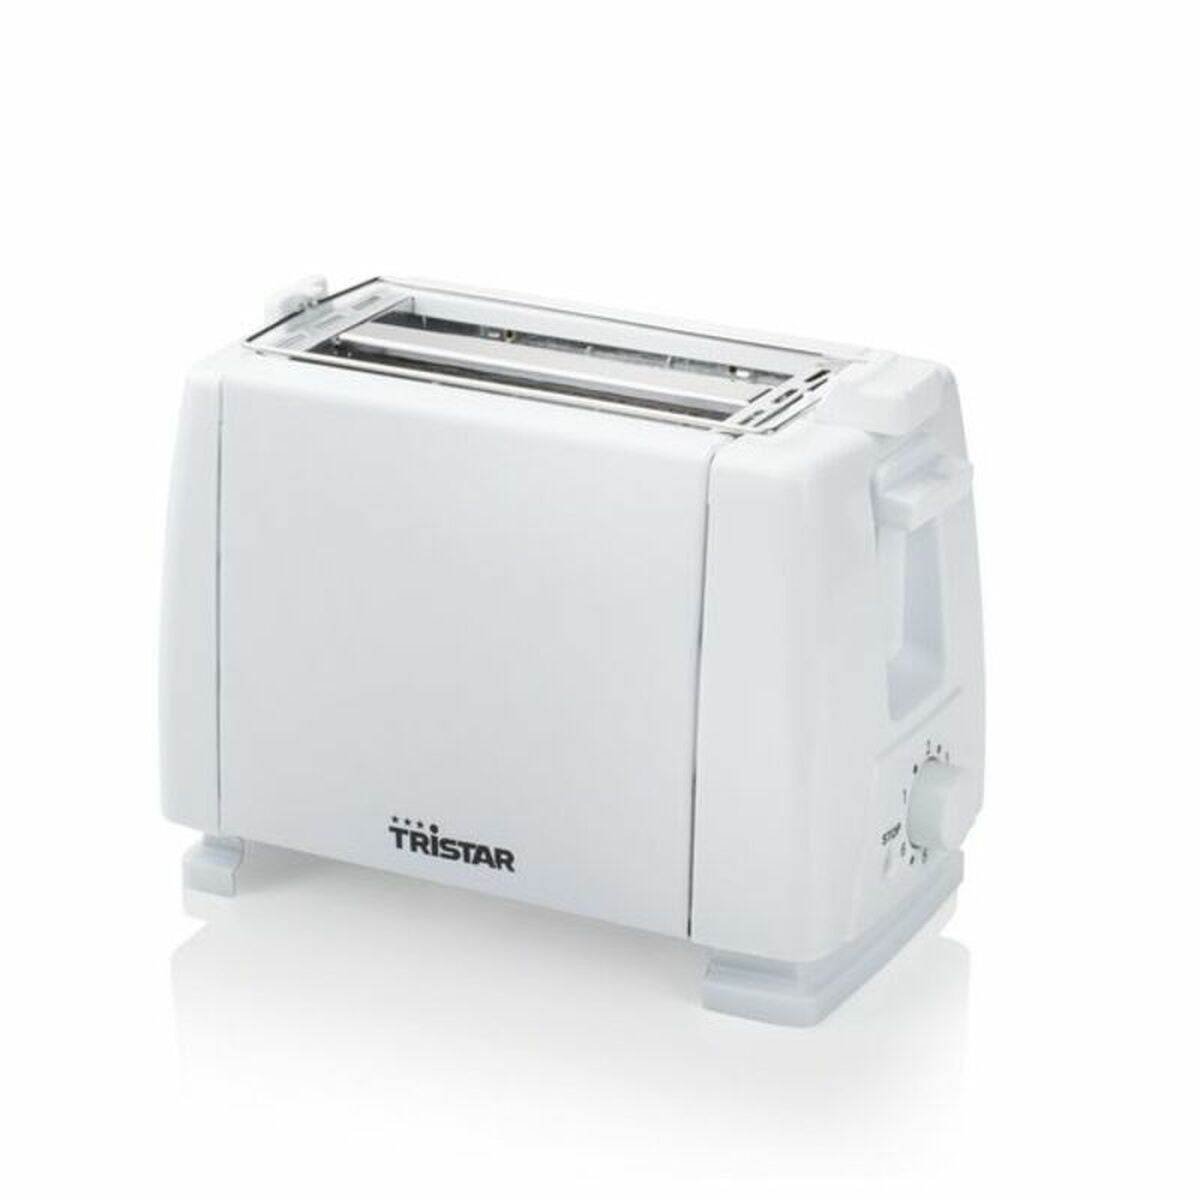 Toaster Tristar BR-1009 600 W - CA International 